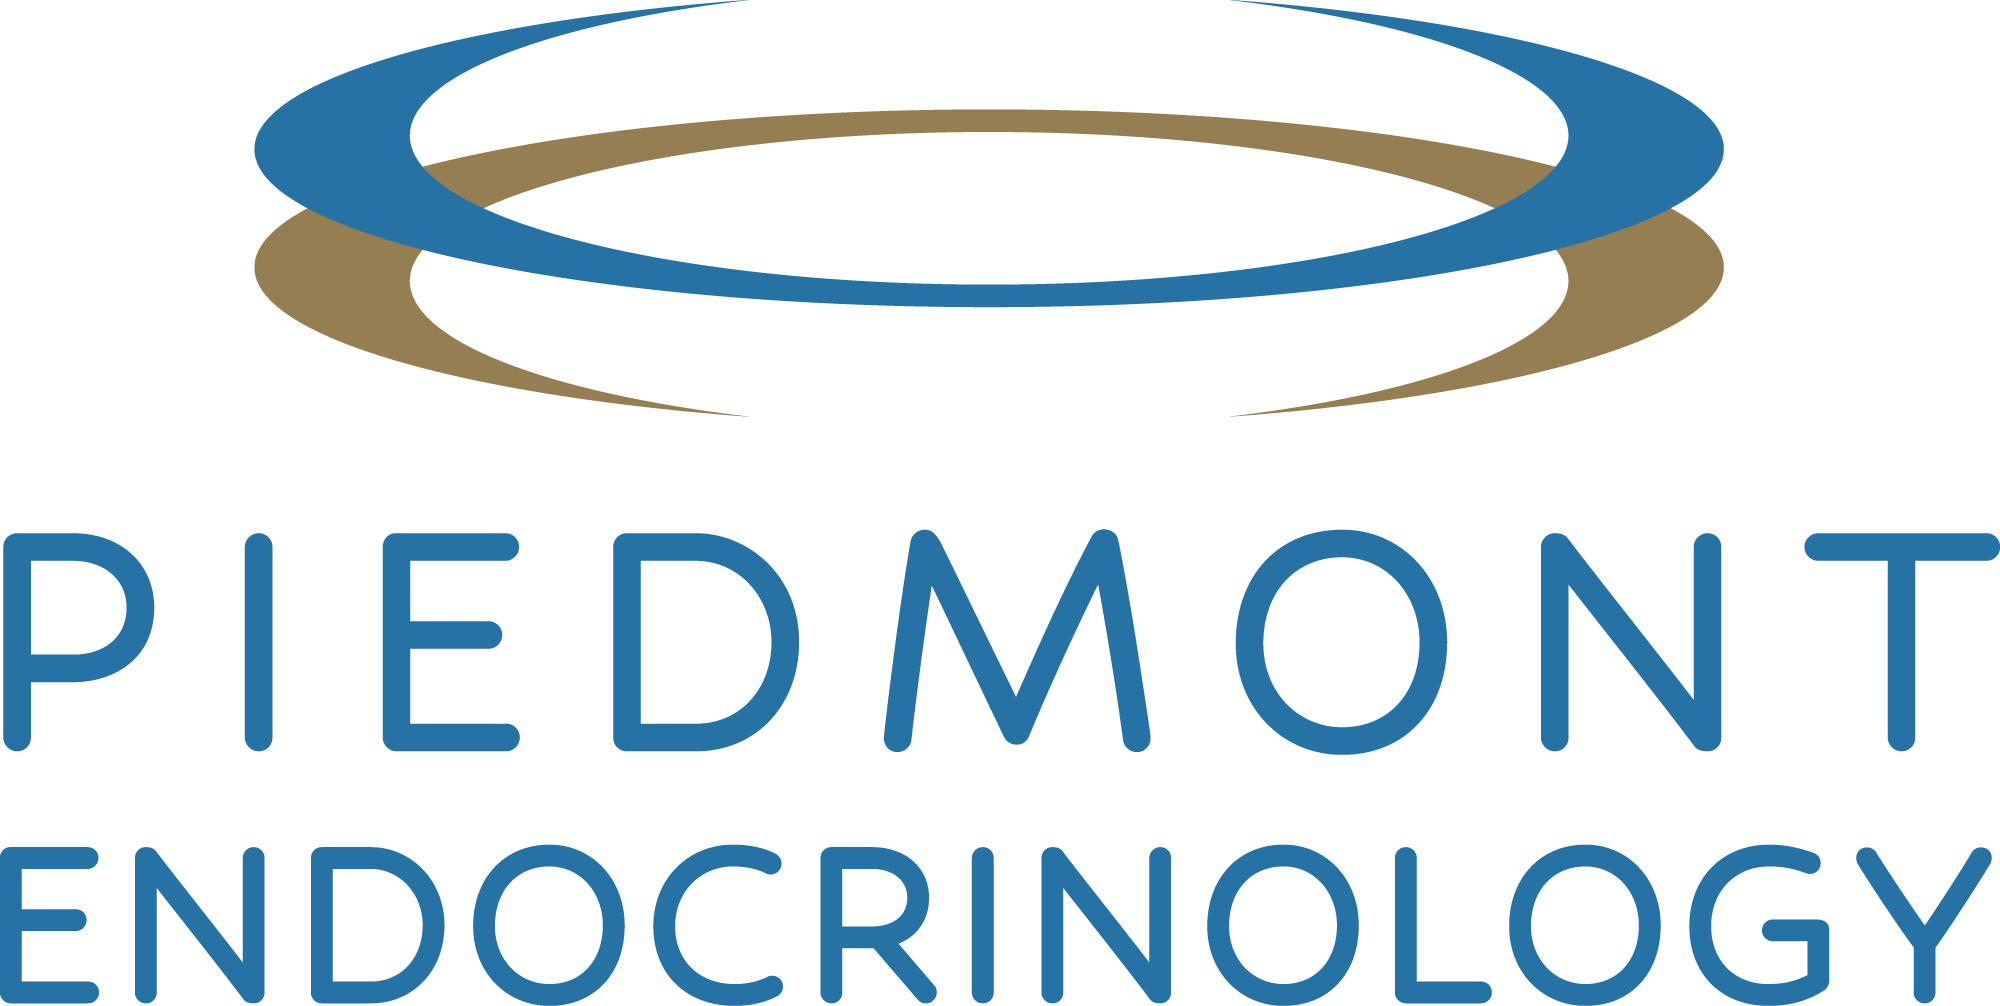 Piedmont Endocrinology